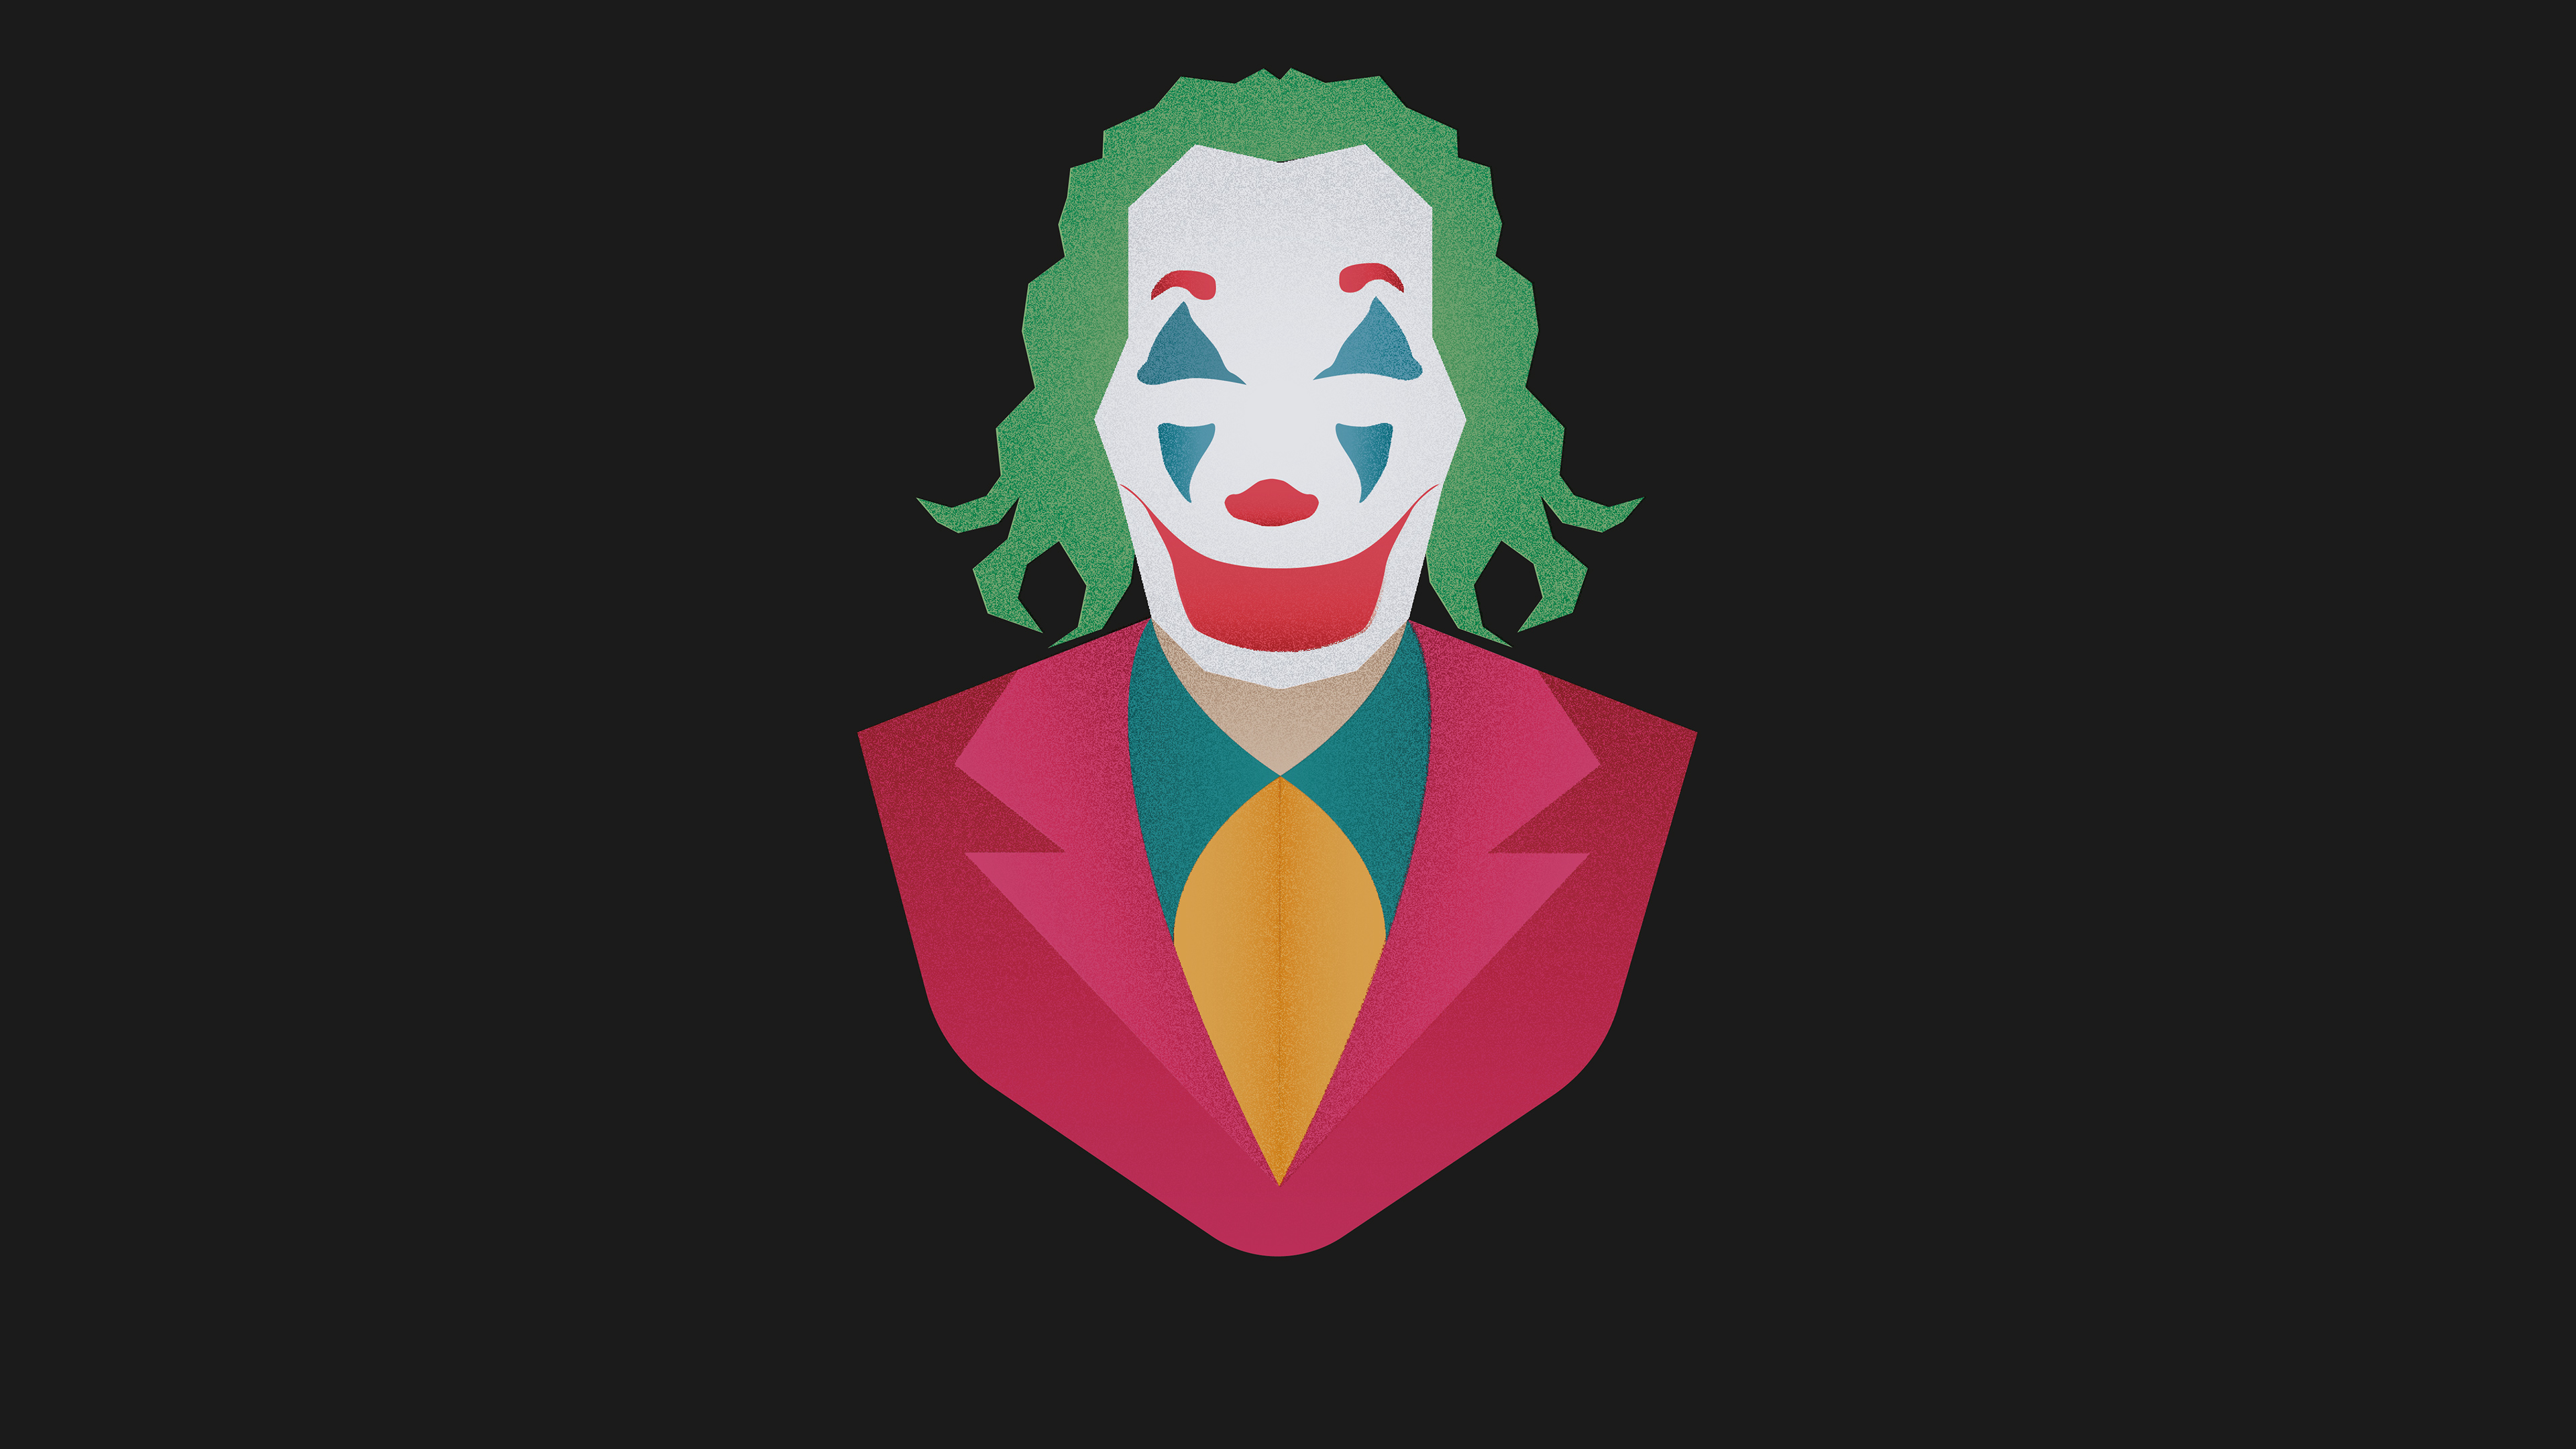  Joker  Minimalist Face  Wallpaper  HD Minimalist 4K  